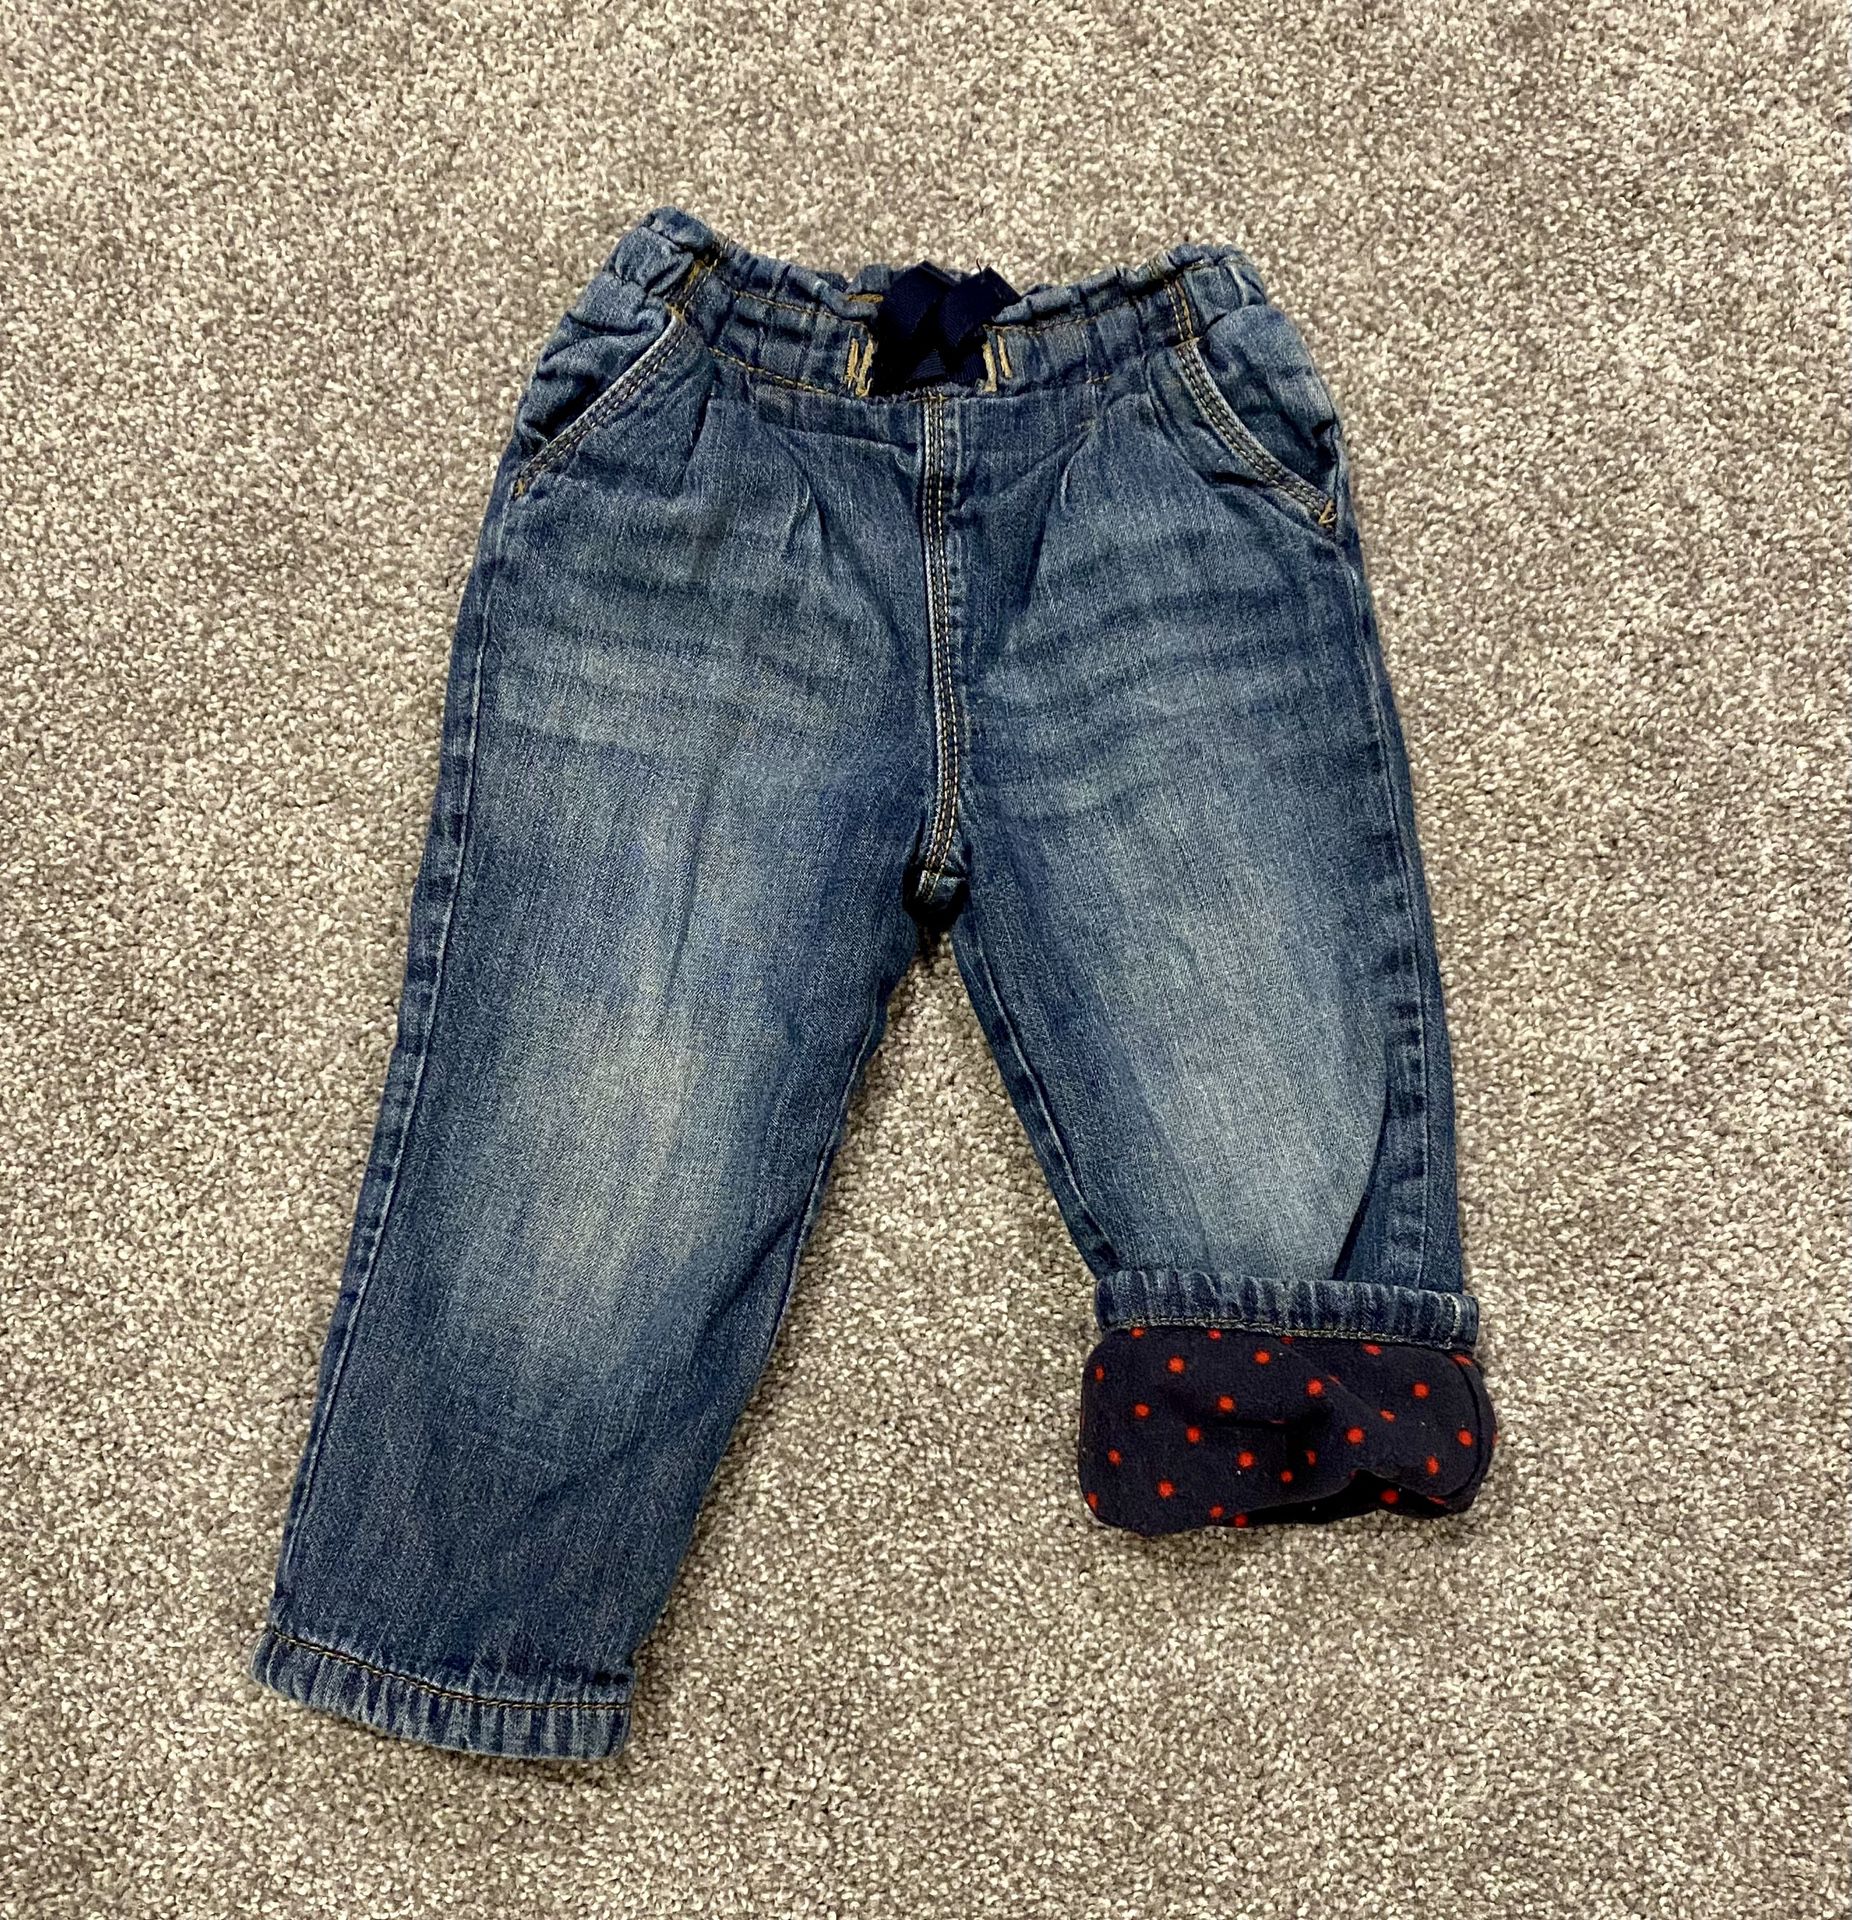 Oshkosh B’Gosh Girls Fleece Lined Jeans - Size 12-18 Months